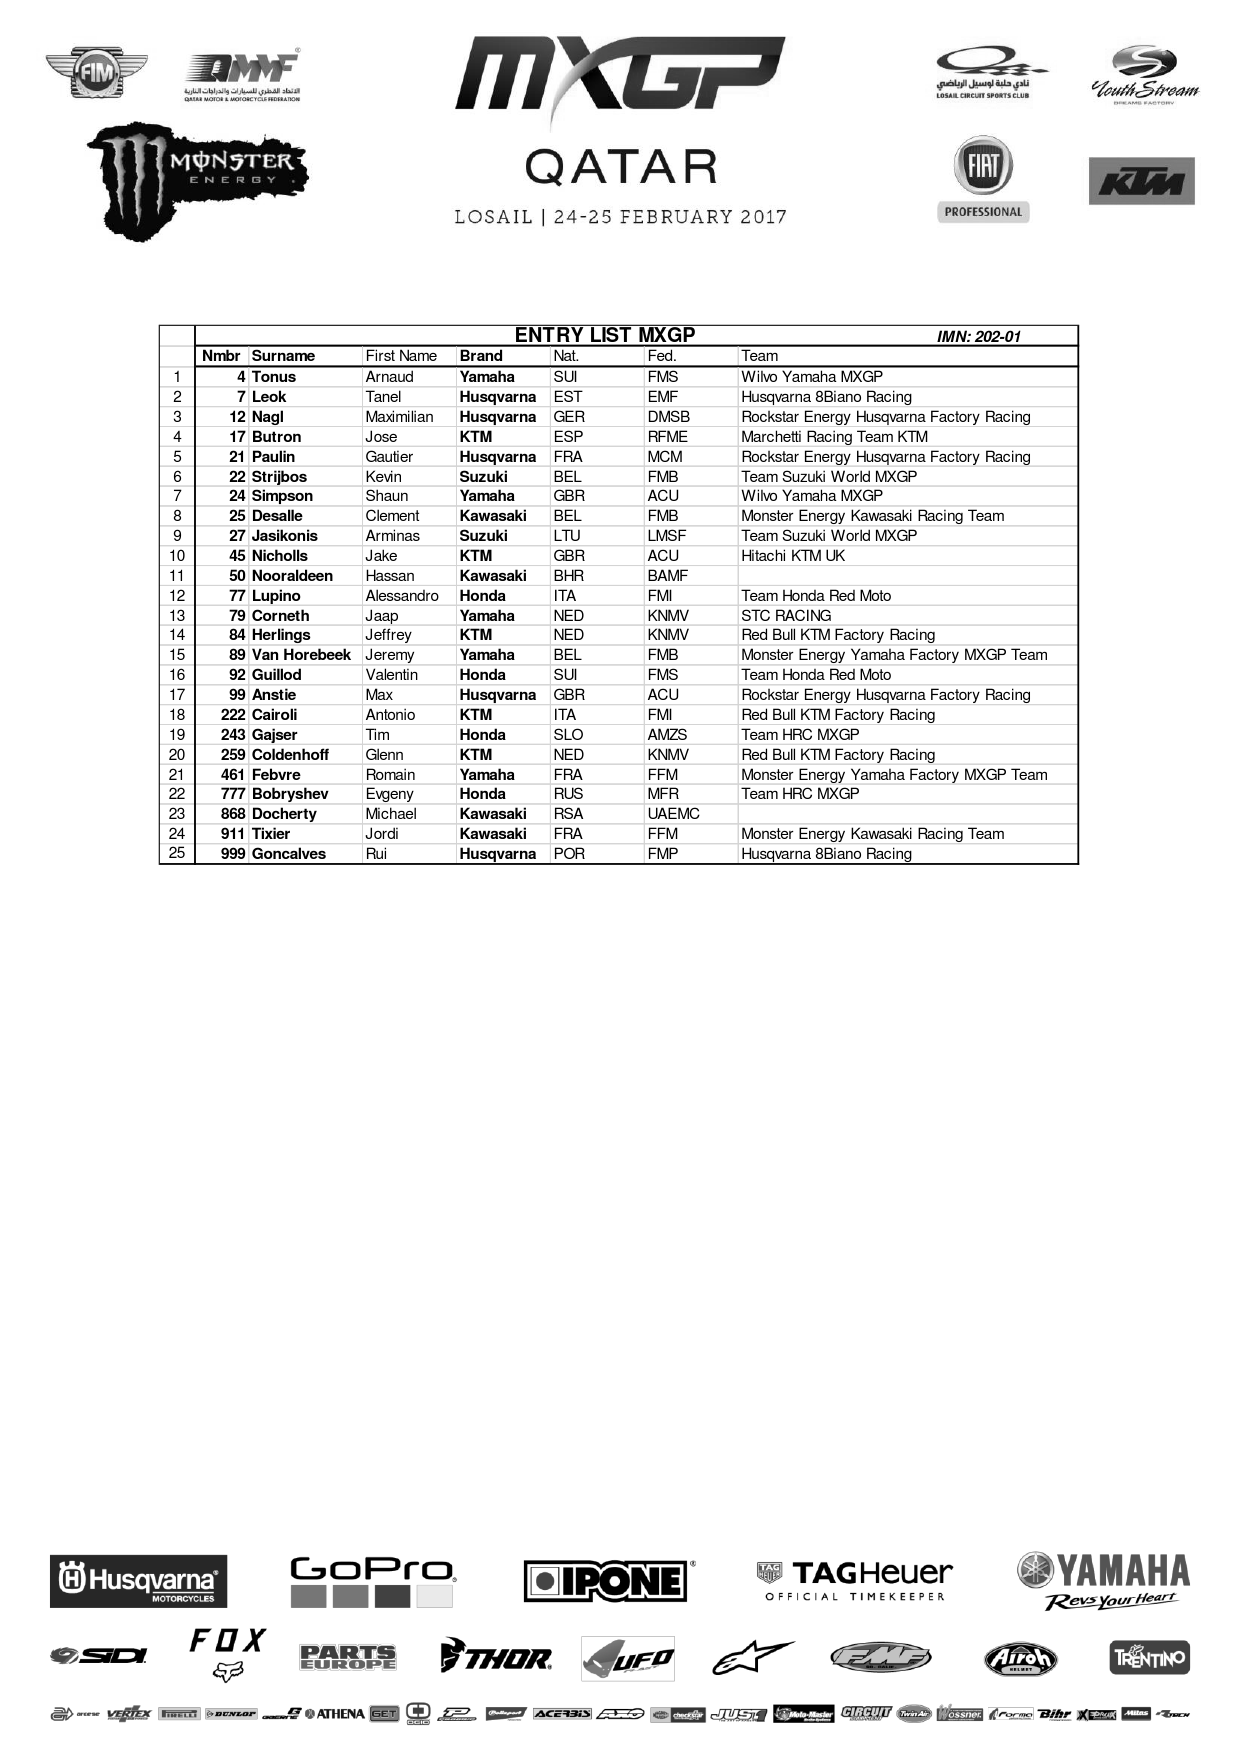  Списки участников Гран-При Катара MXGP